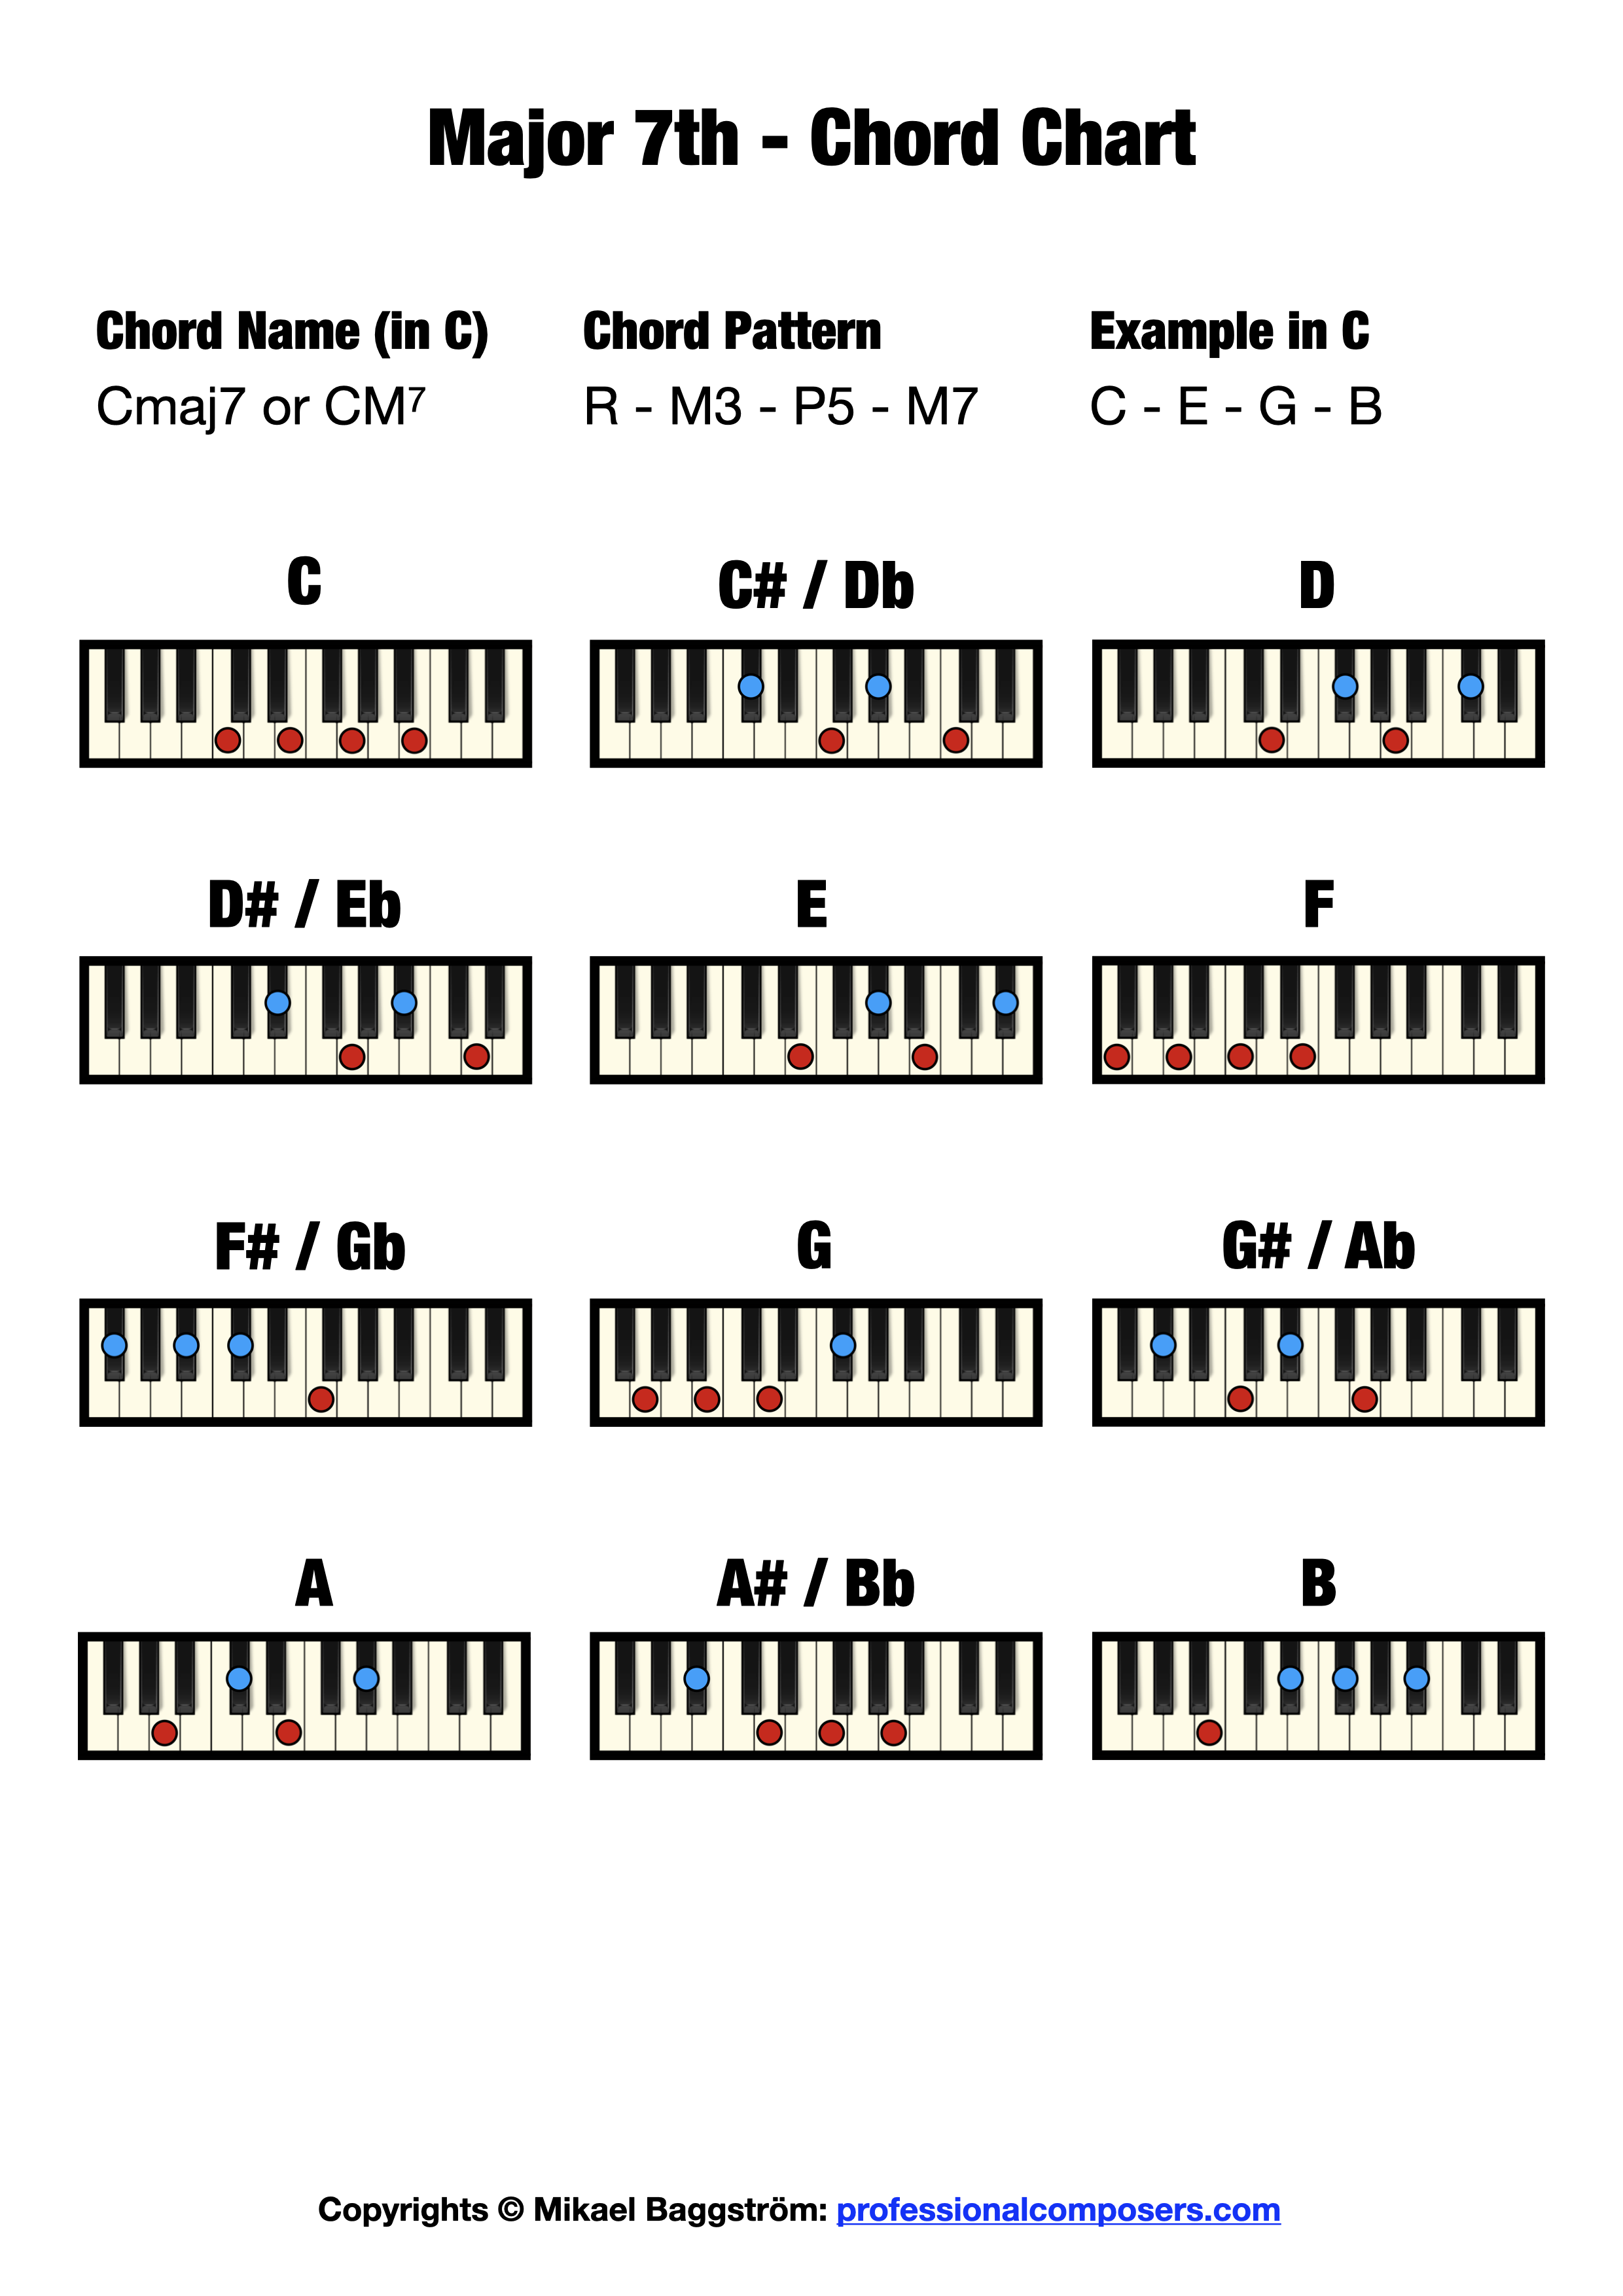 Major 7th Chord Chart on Piano.